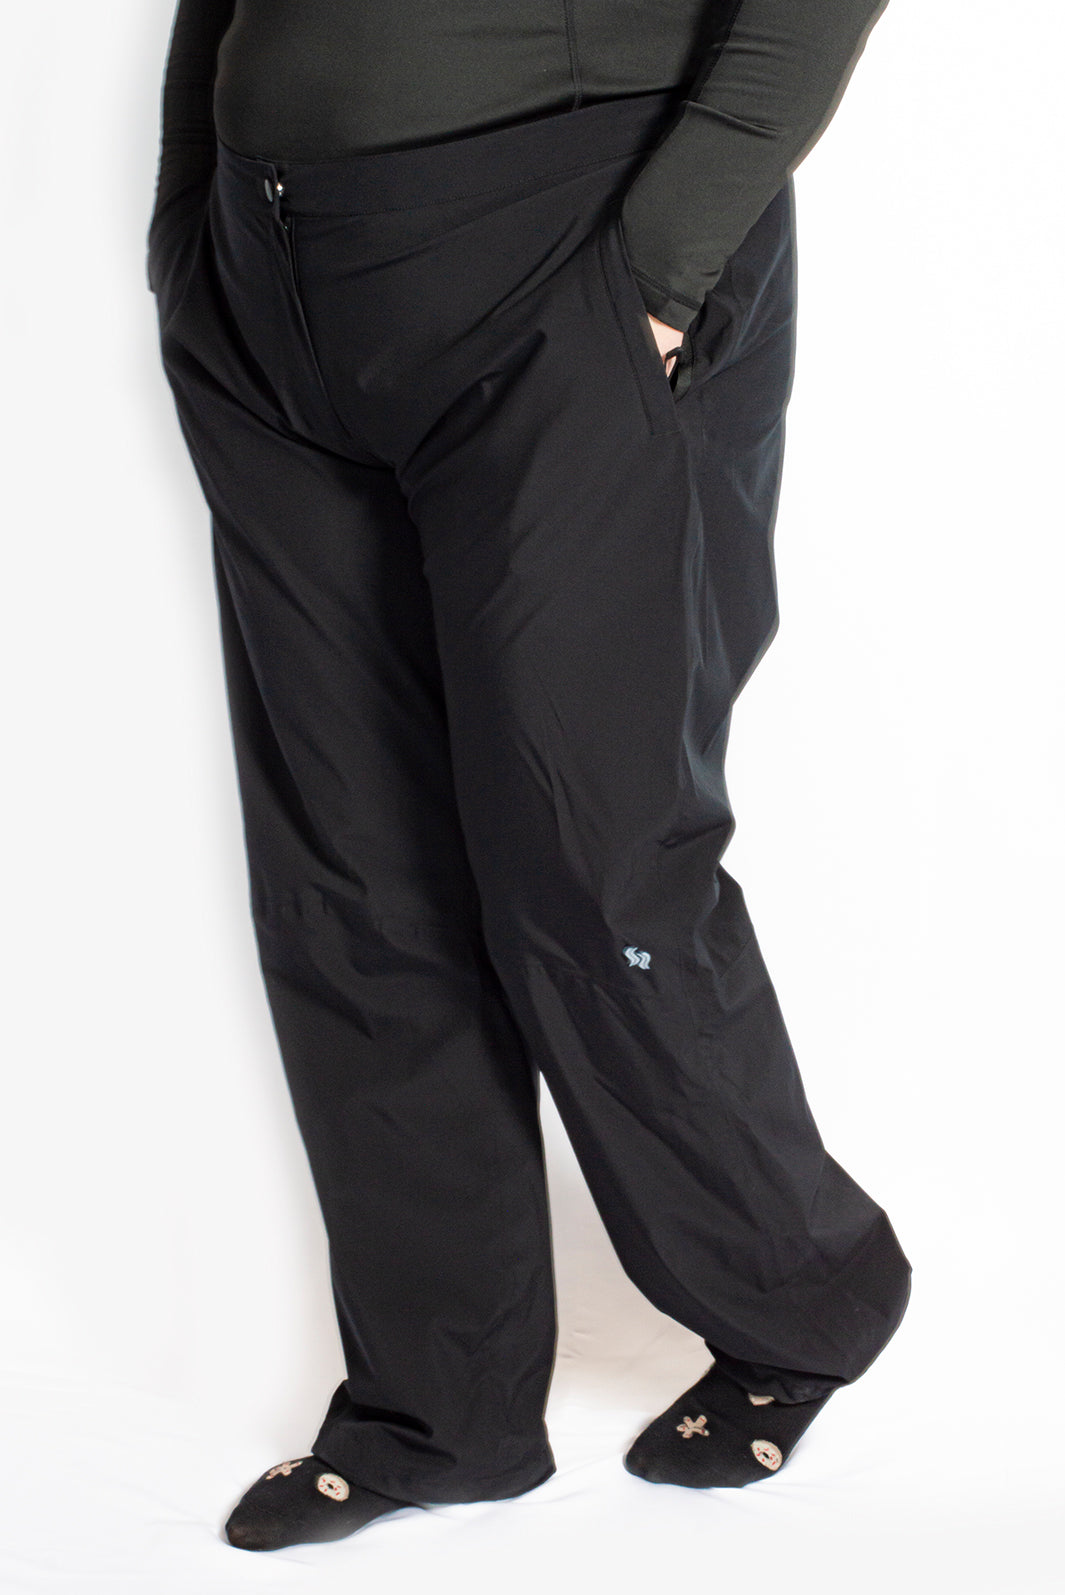 Pantalon Imper-respirant performant SEALED PII Taille Plus de Sportive Plus